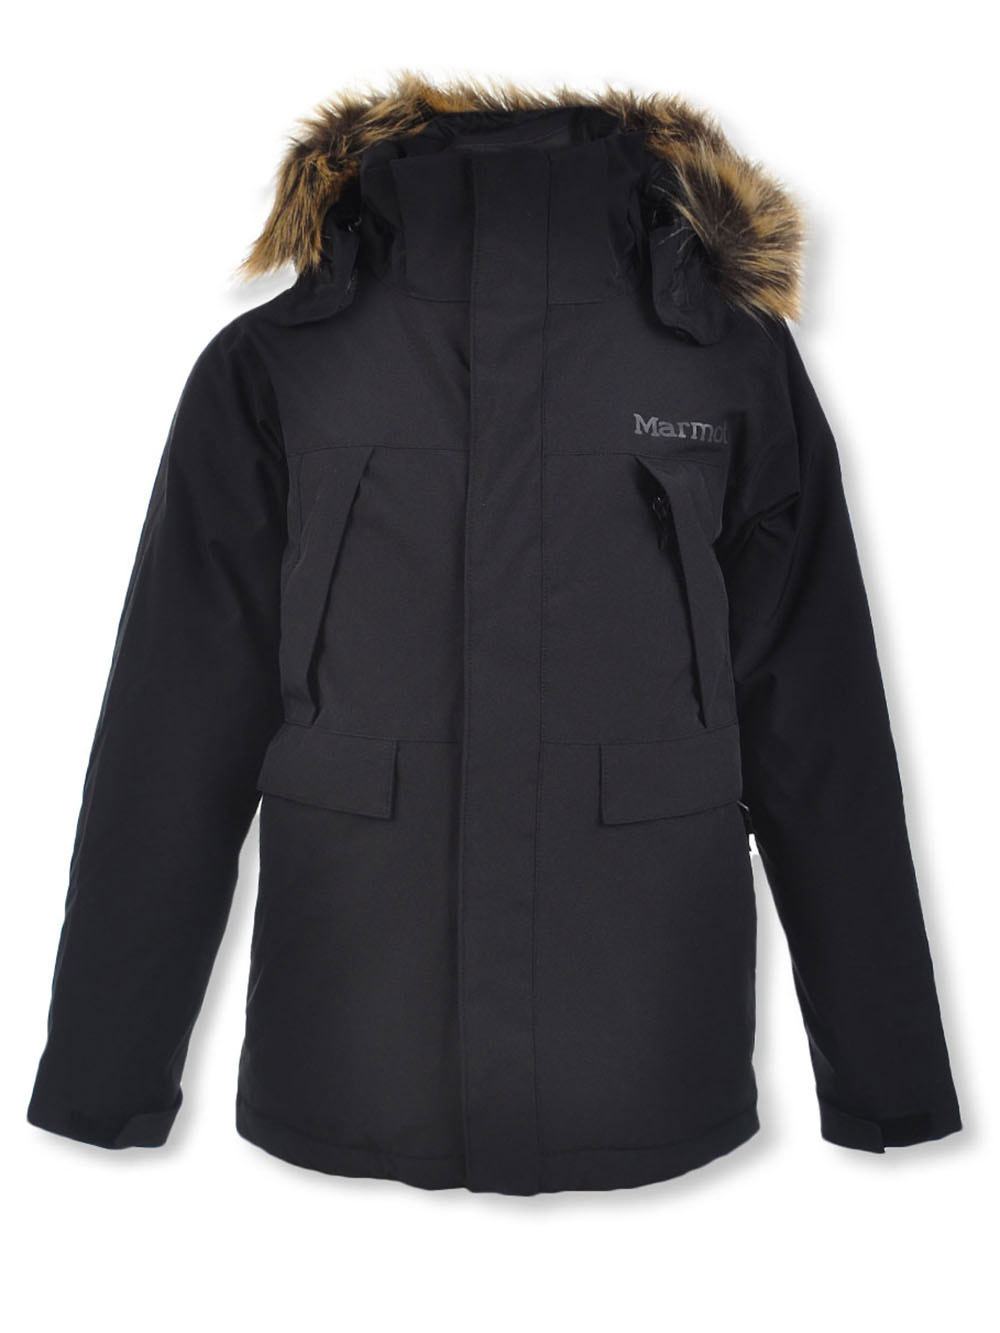 Size 14-16 Jackets Coats for Boys